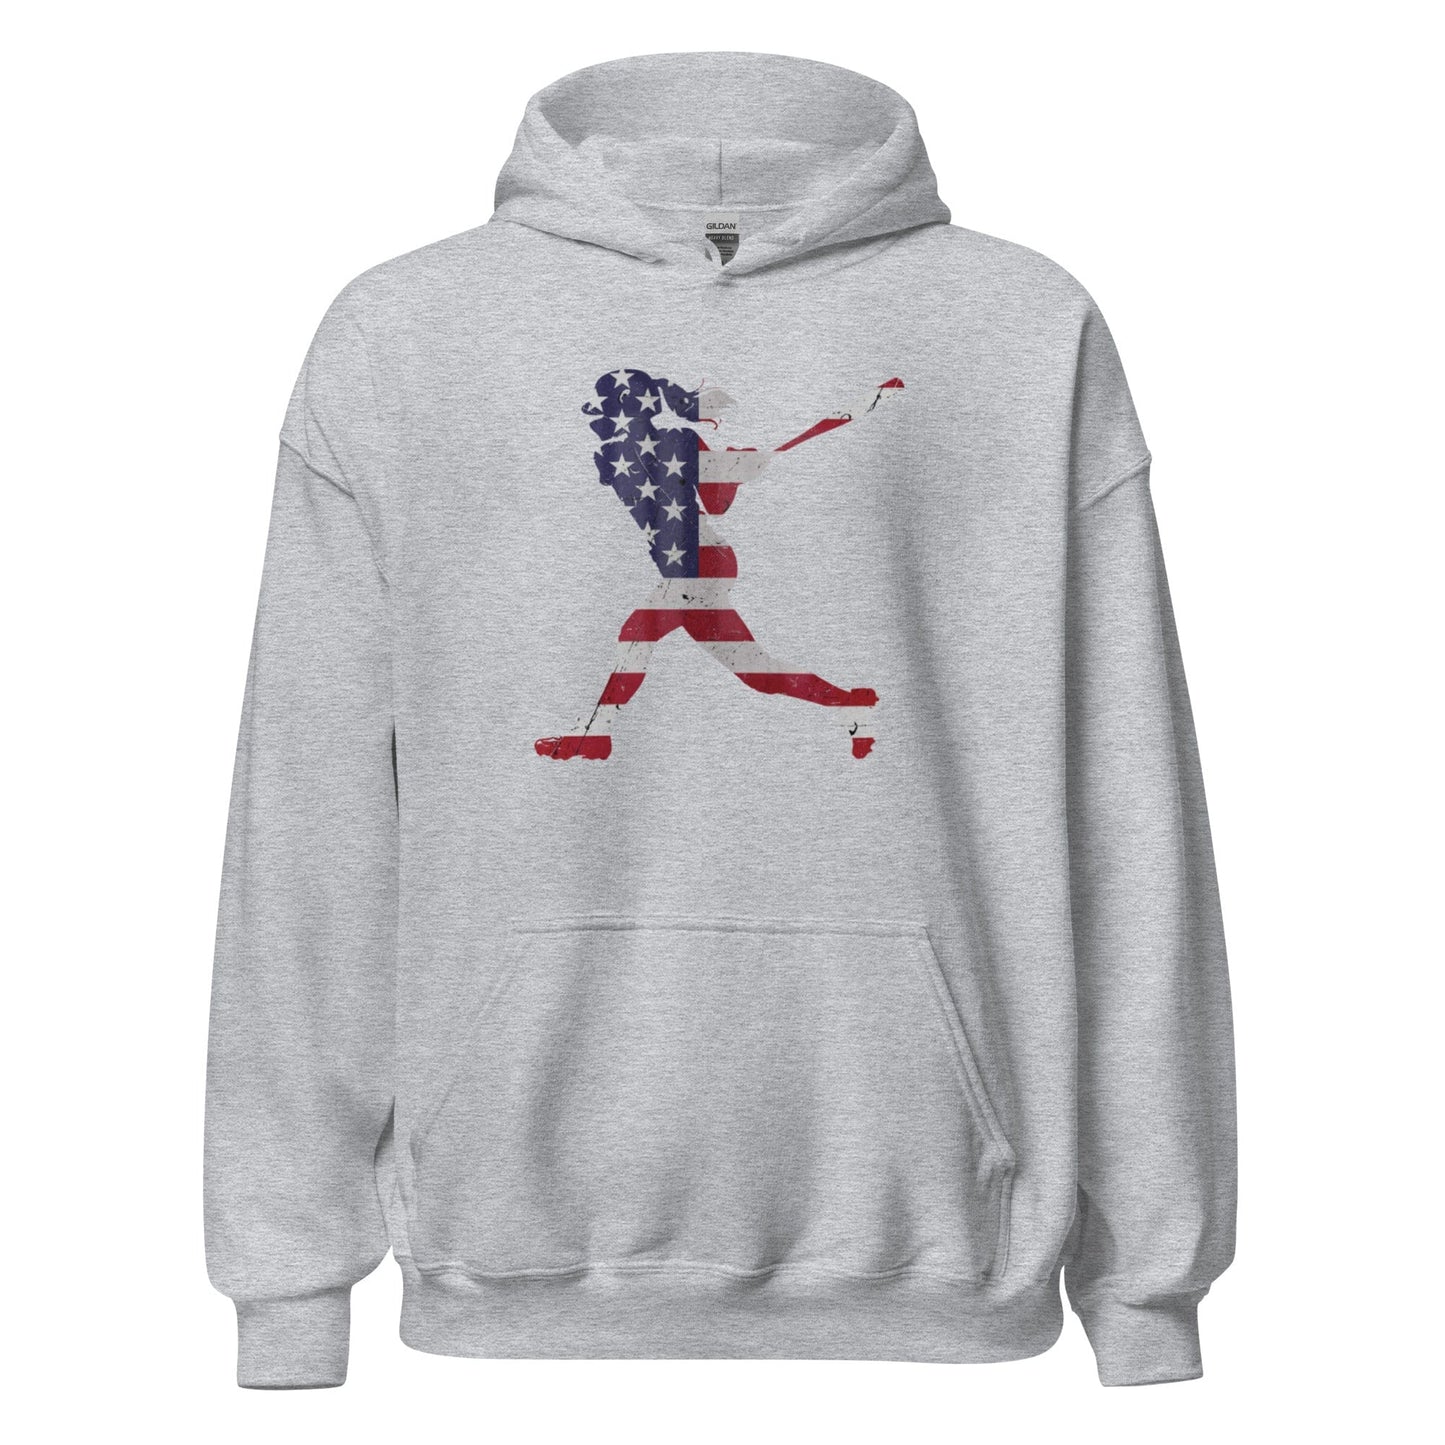 American Flag Softball Batter - Adult Hoodie